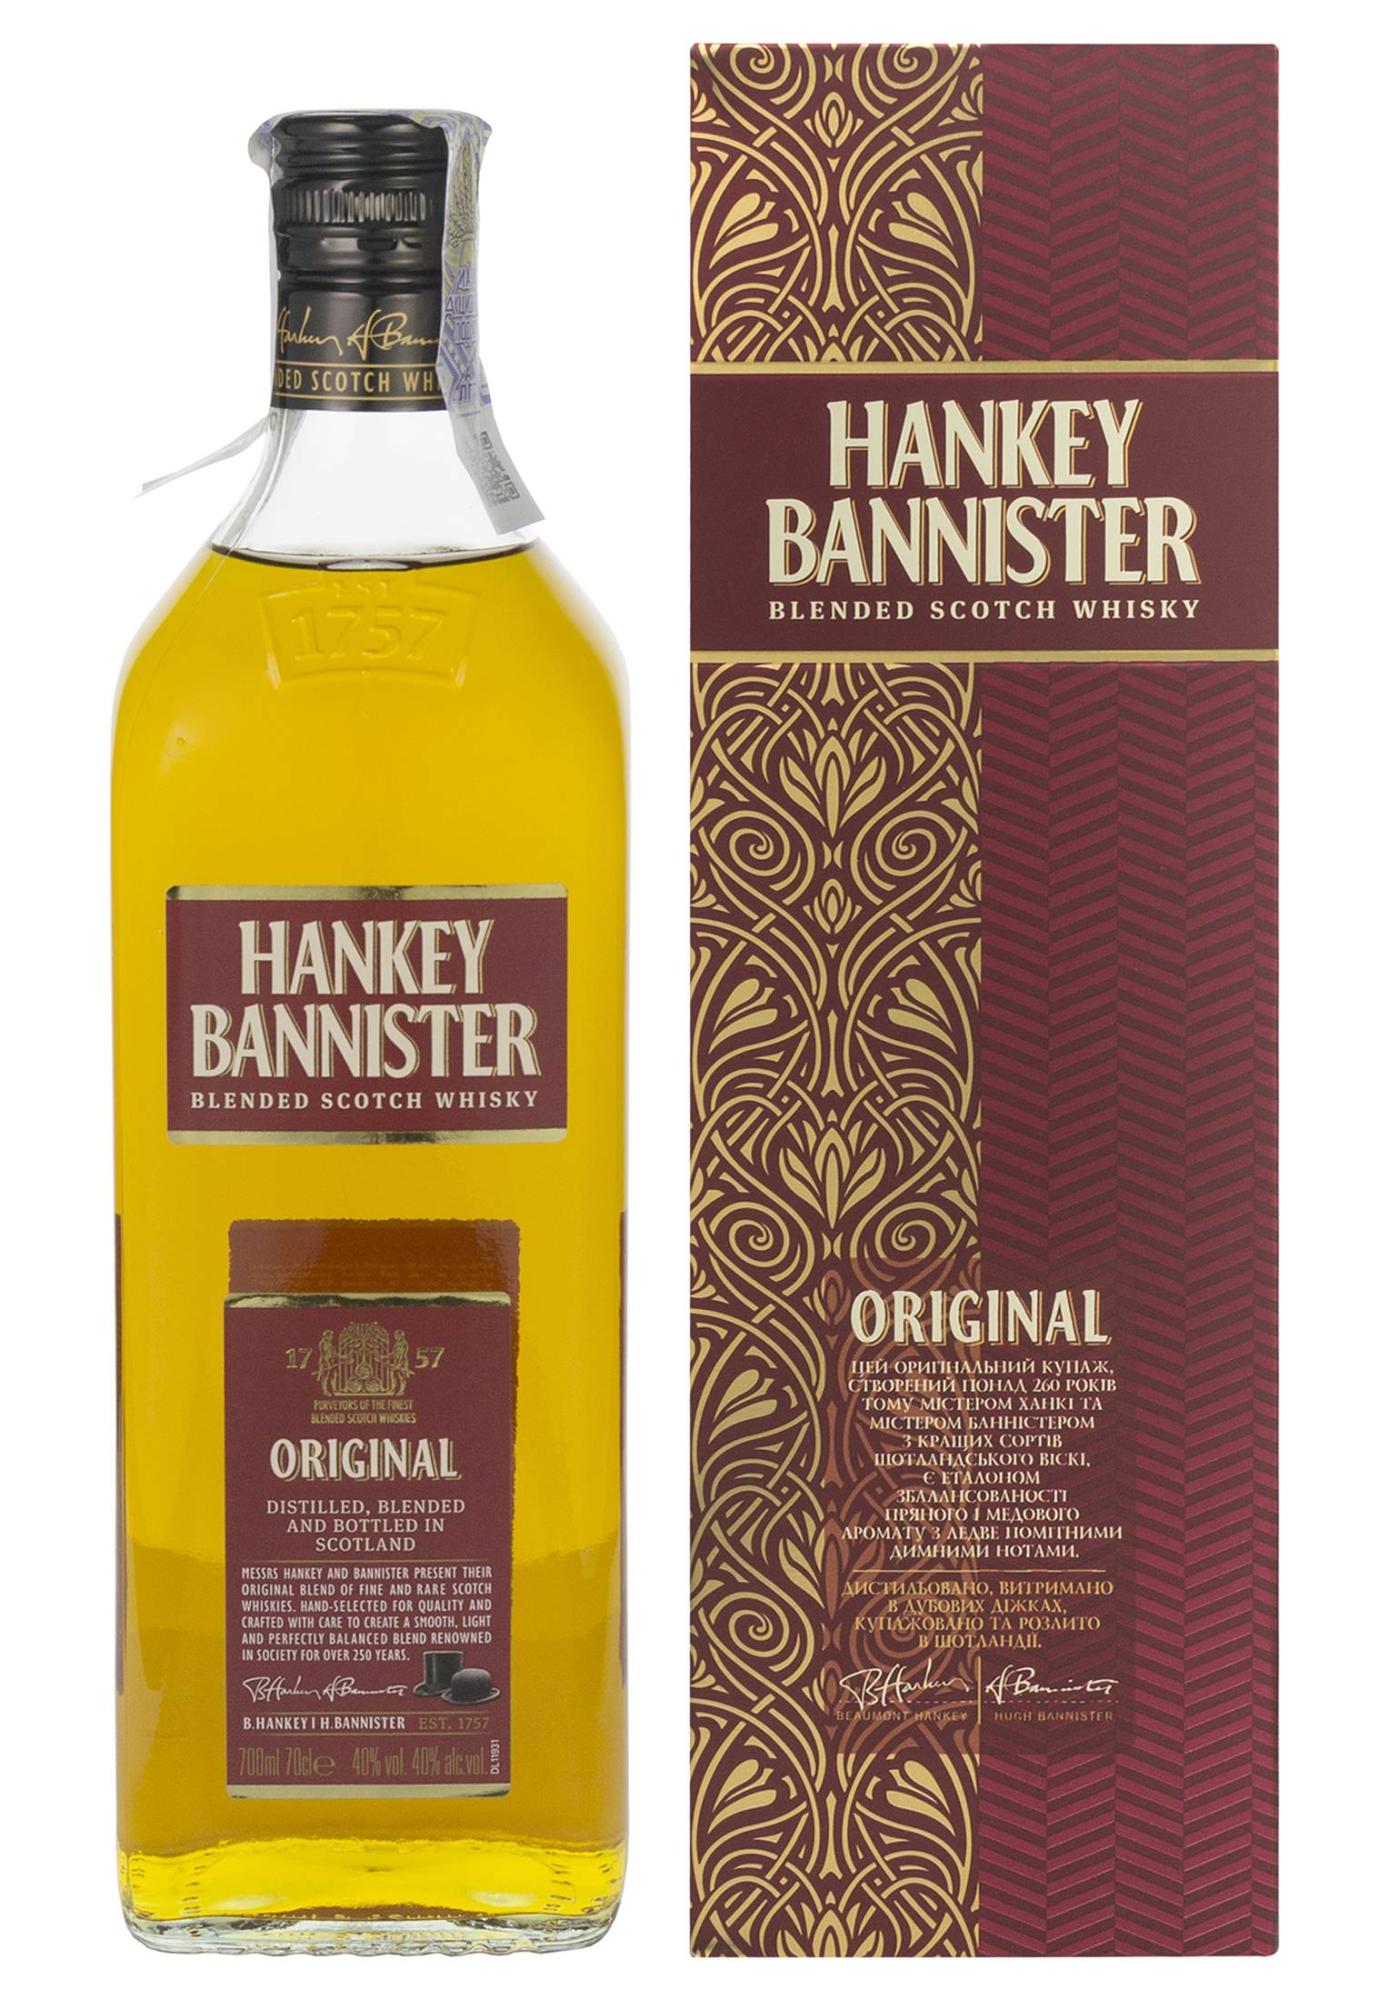 Ханки баннистер. Виски Hankey Bannister Original. Виски Hankey Bannister, 0.7 л. Вискарь Hankey Bannister. Виски "Hankey Bannister" Original, 1 л.